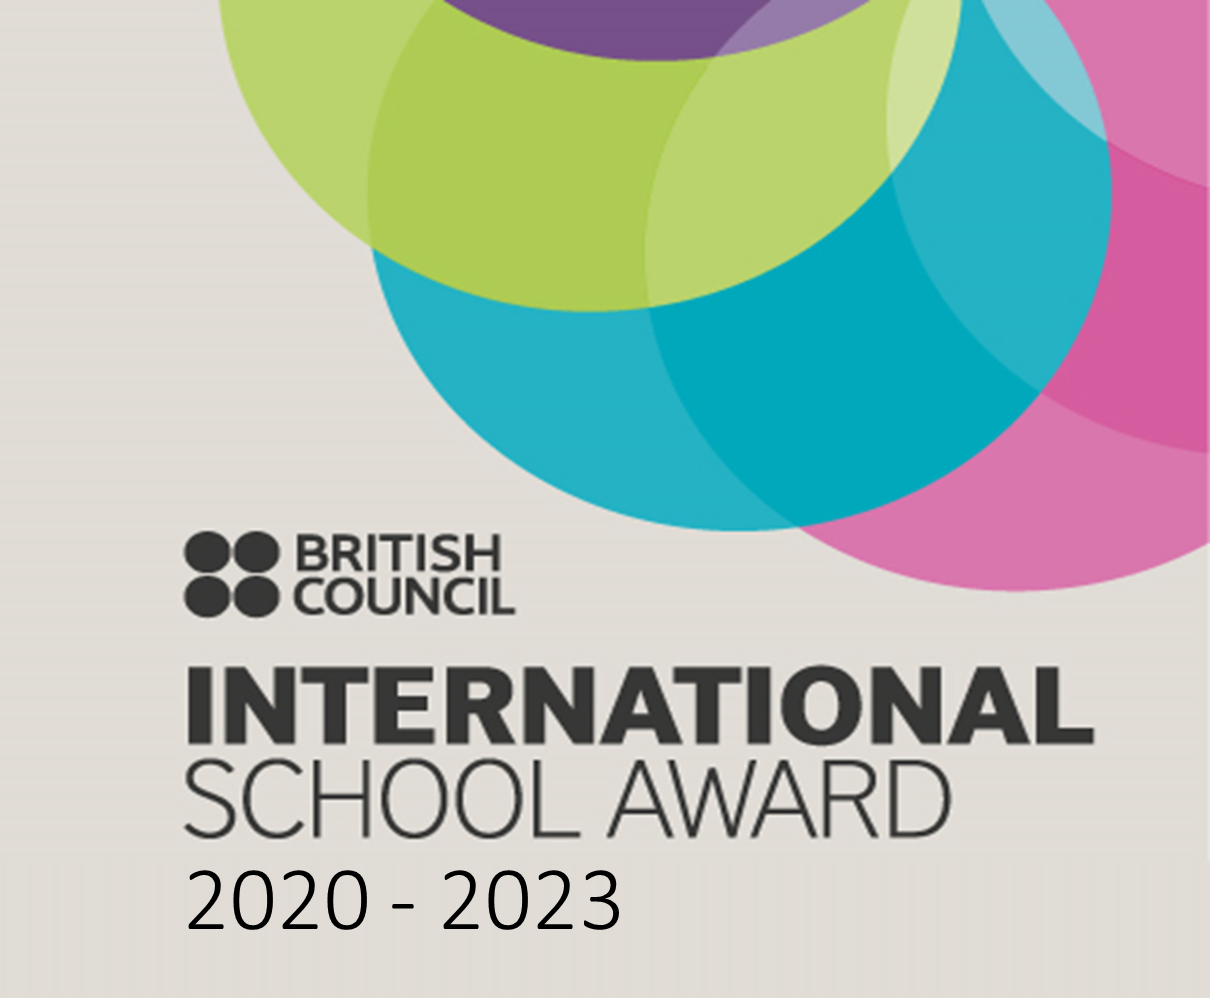 Internaltional School Award 2017-2020